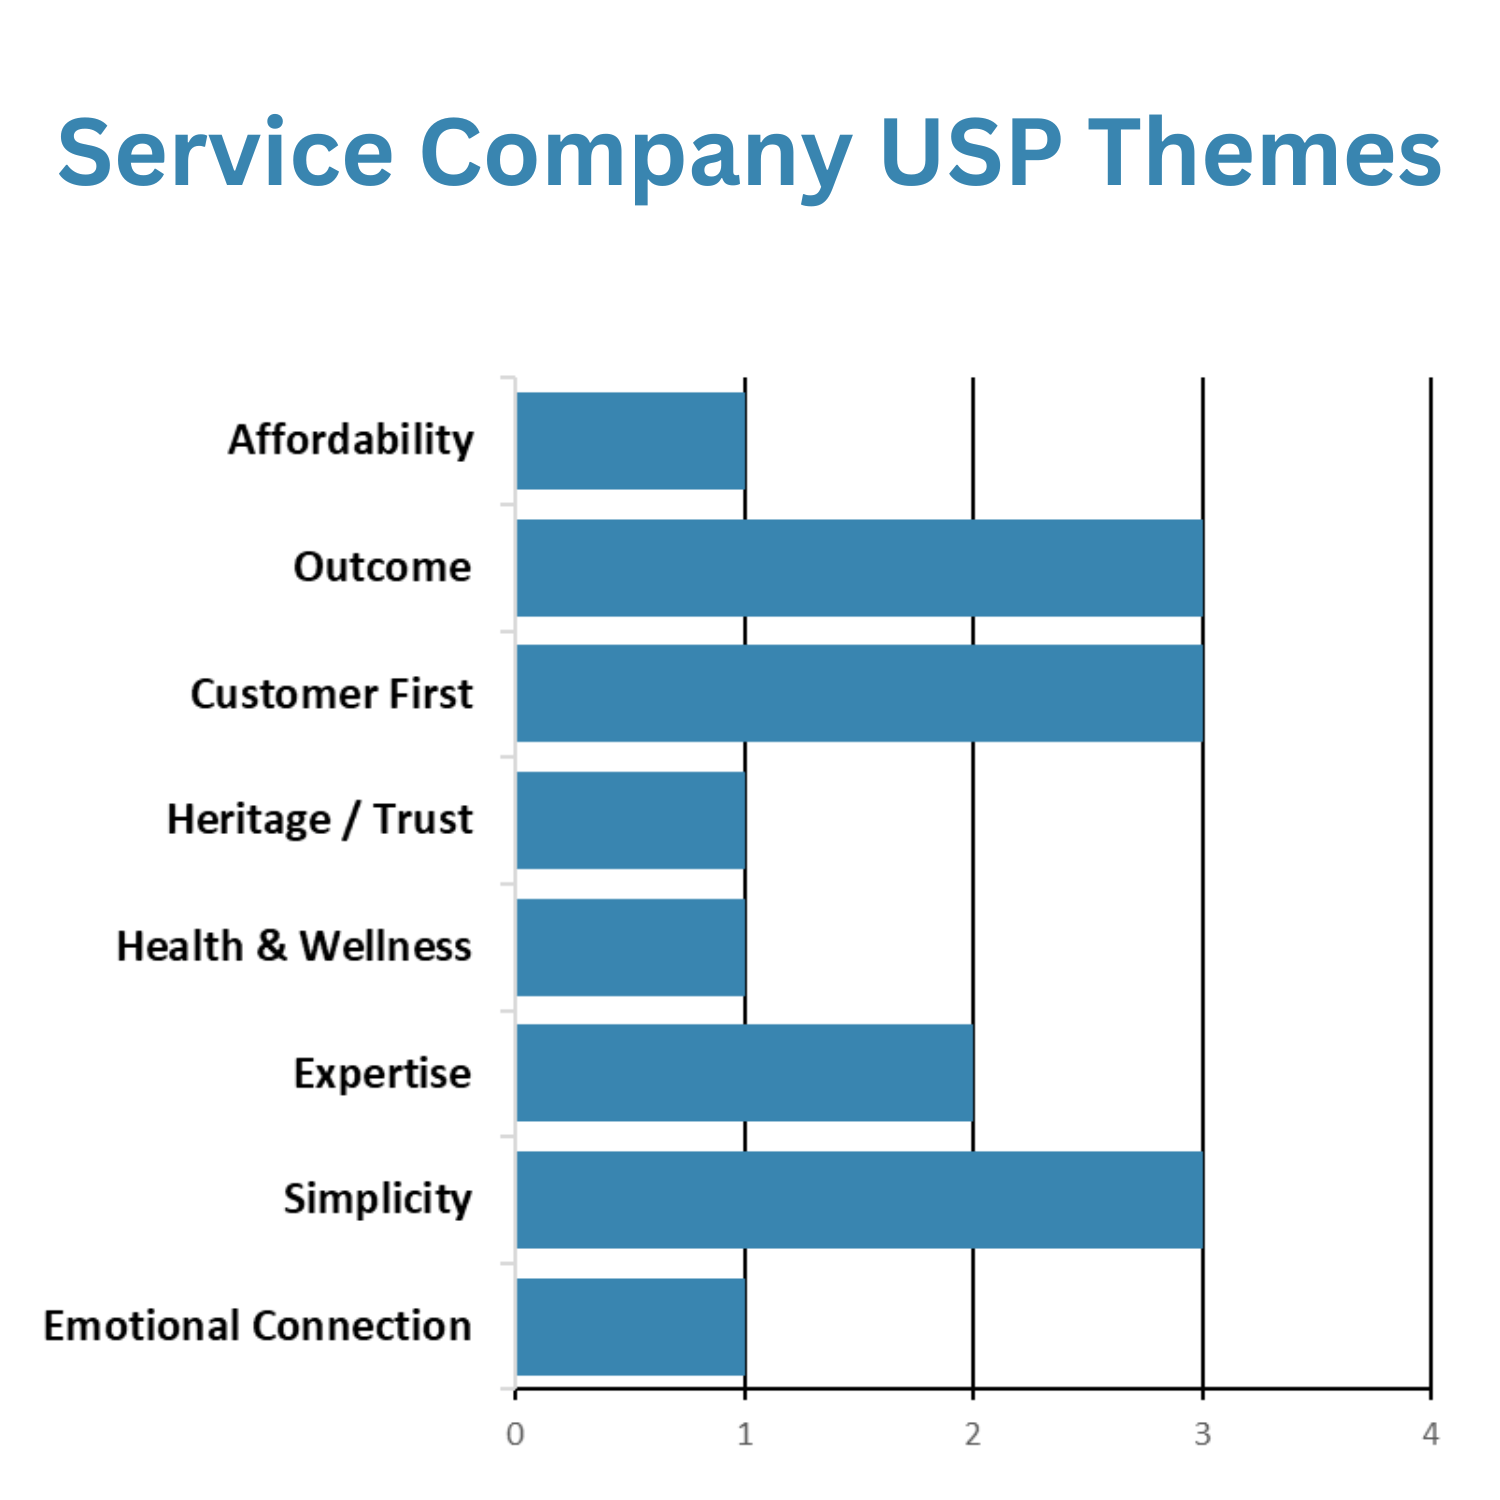 Service Company USP Themes